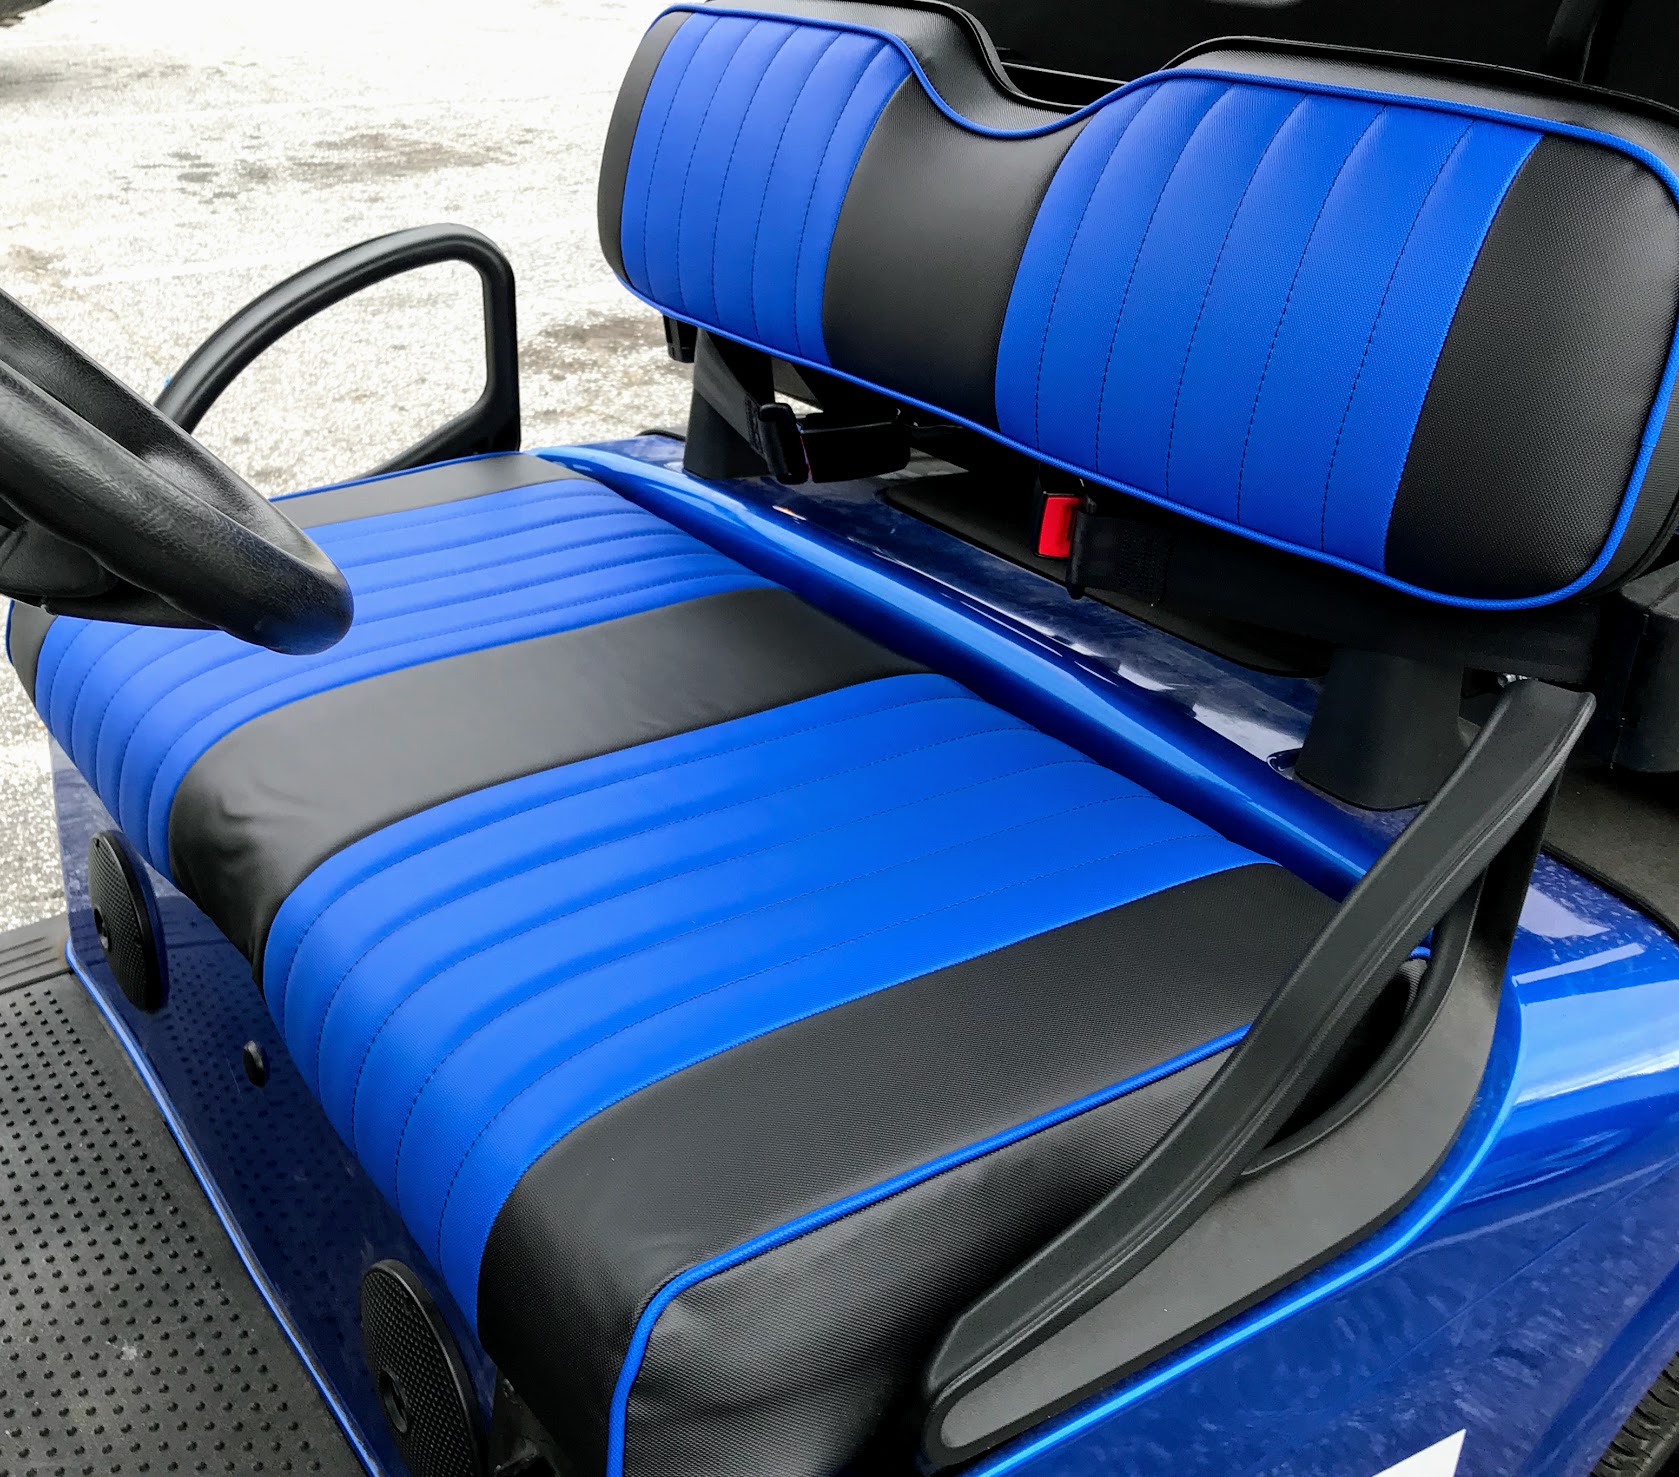 Club Car Golf Cart Seat Covers - Mary Blog